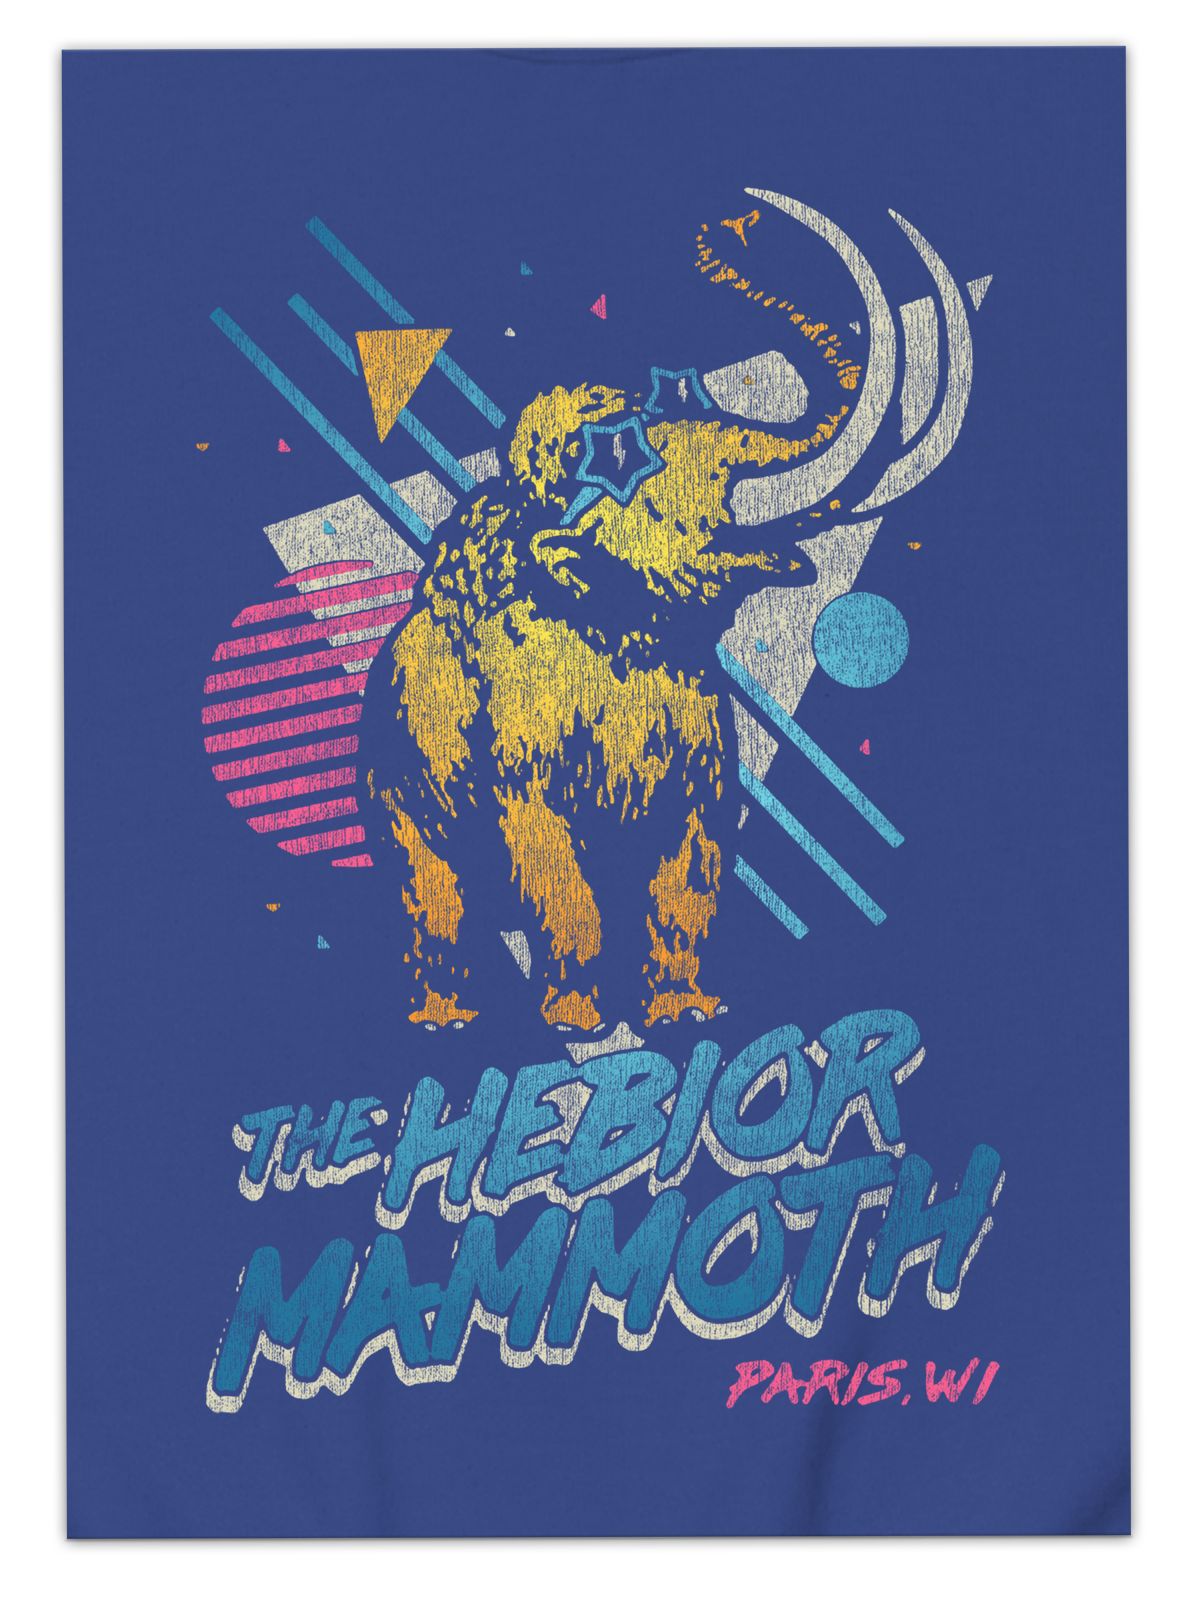 The Hebior Mammoth, Paris, WI Adult Crewneck Sweatshirt